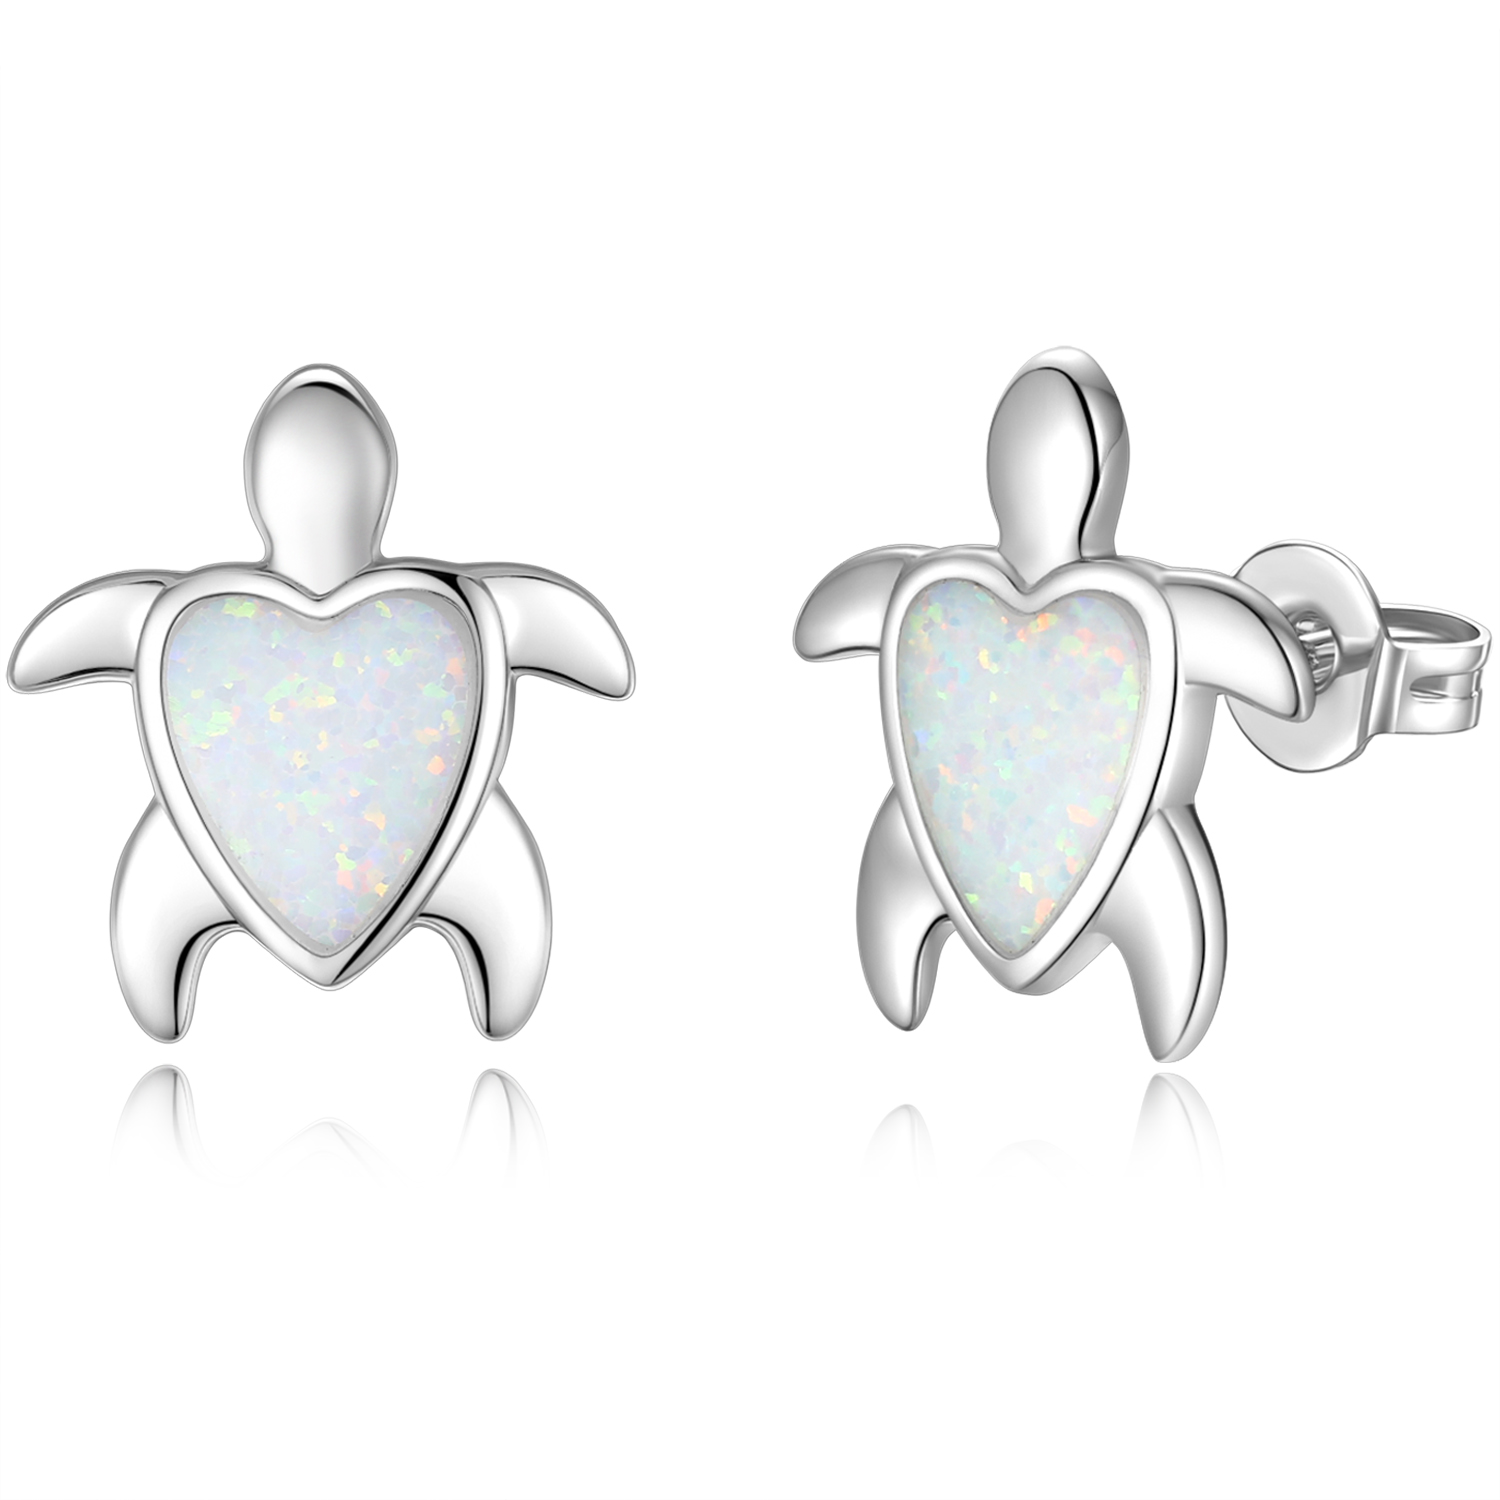 Merryshine Jewelry S925 Sterling Silver Rhodium Plated Heart Shaped White Opal Sea Turtle Earrings